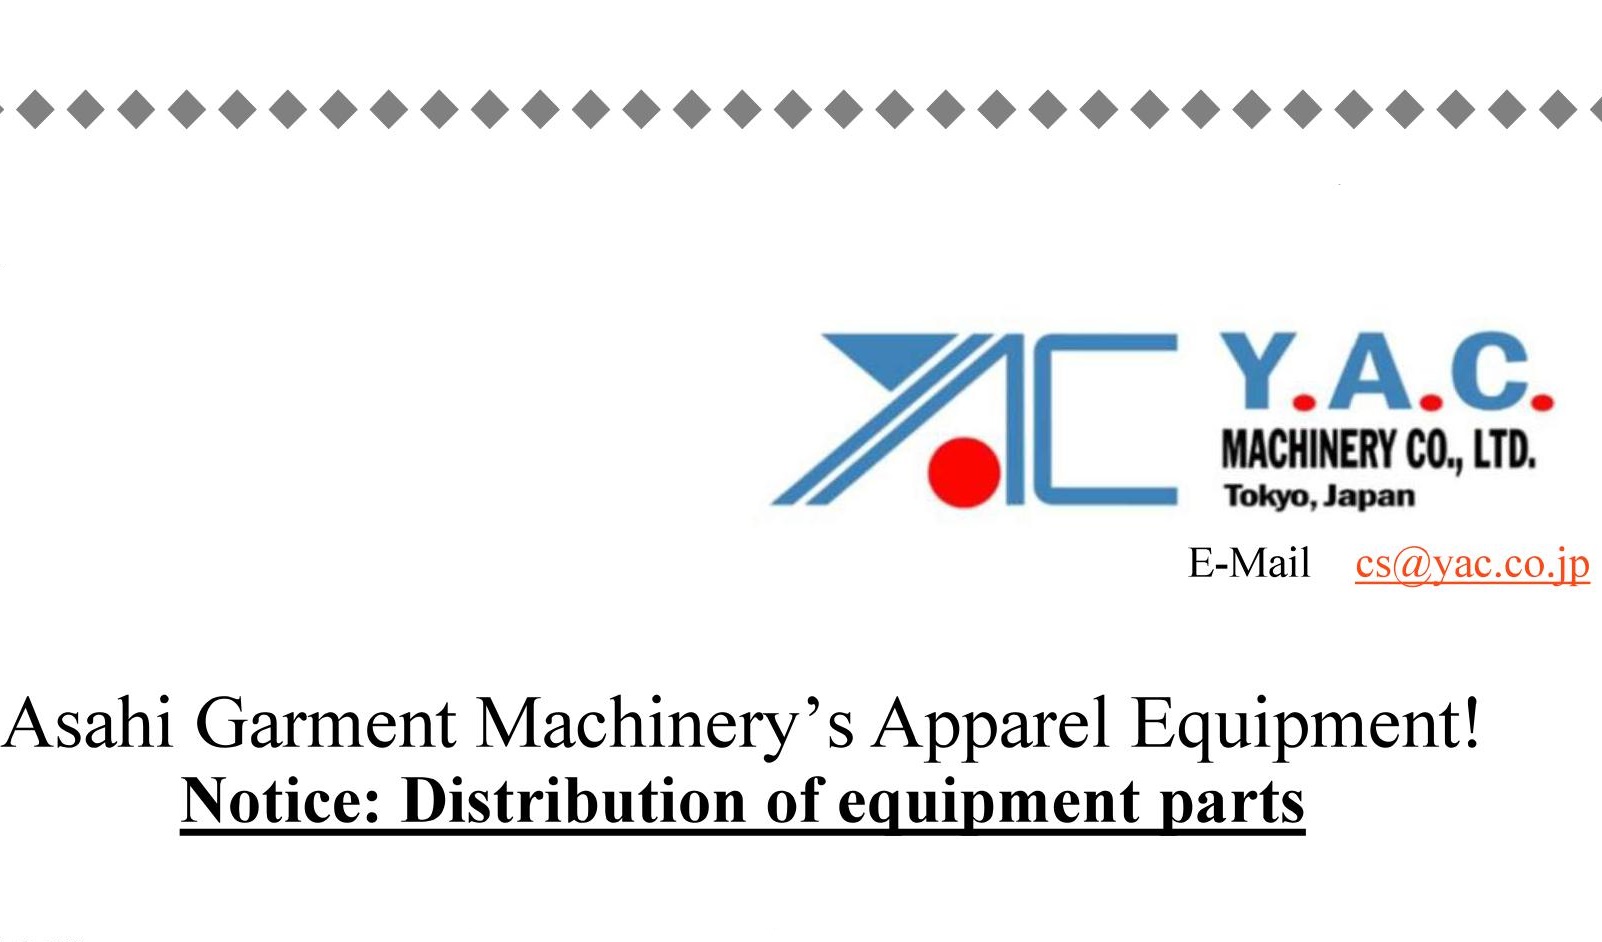 Notice: Distribution of equipment parts